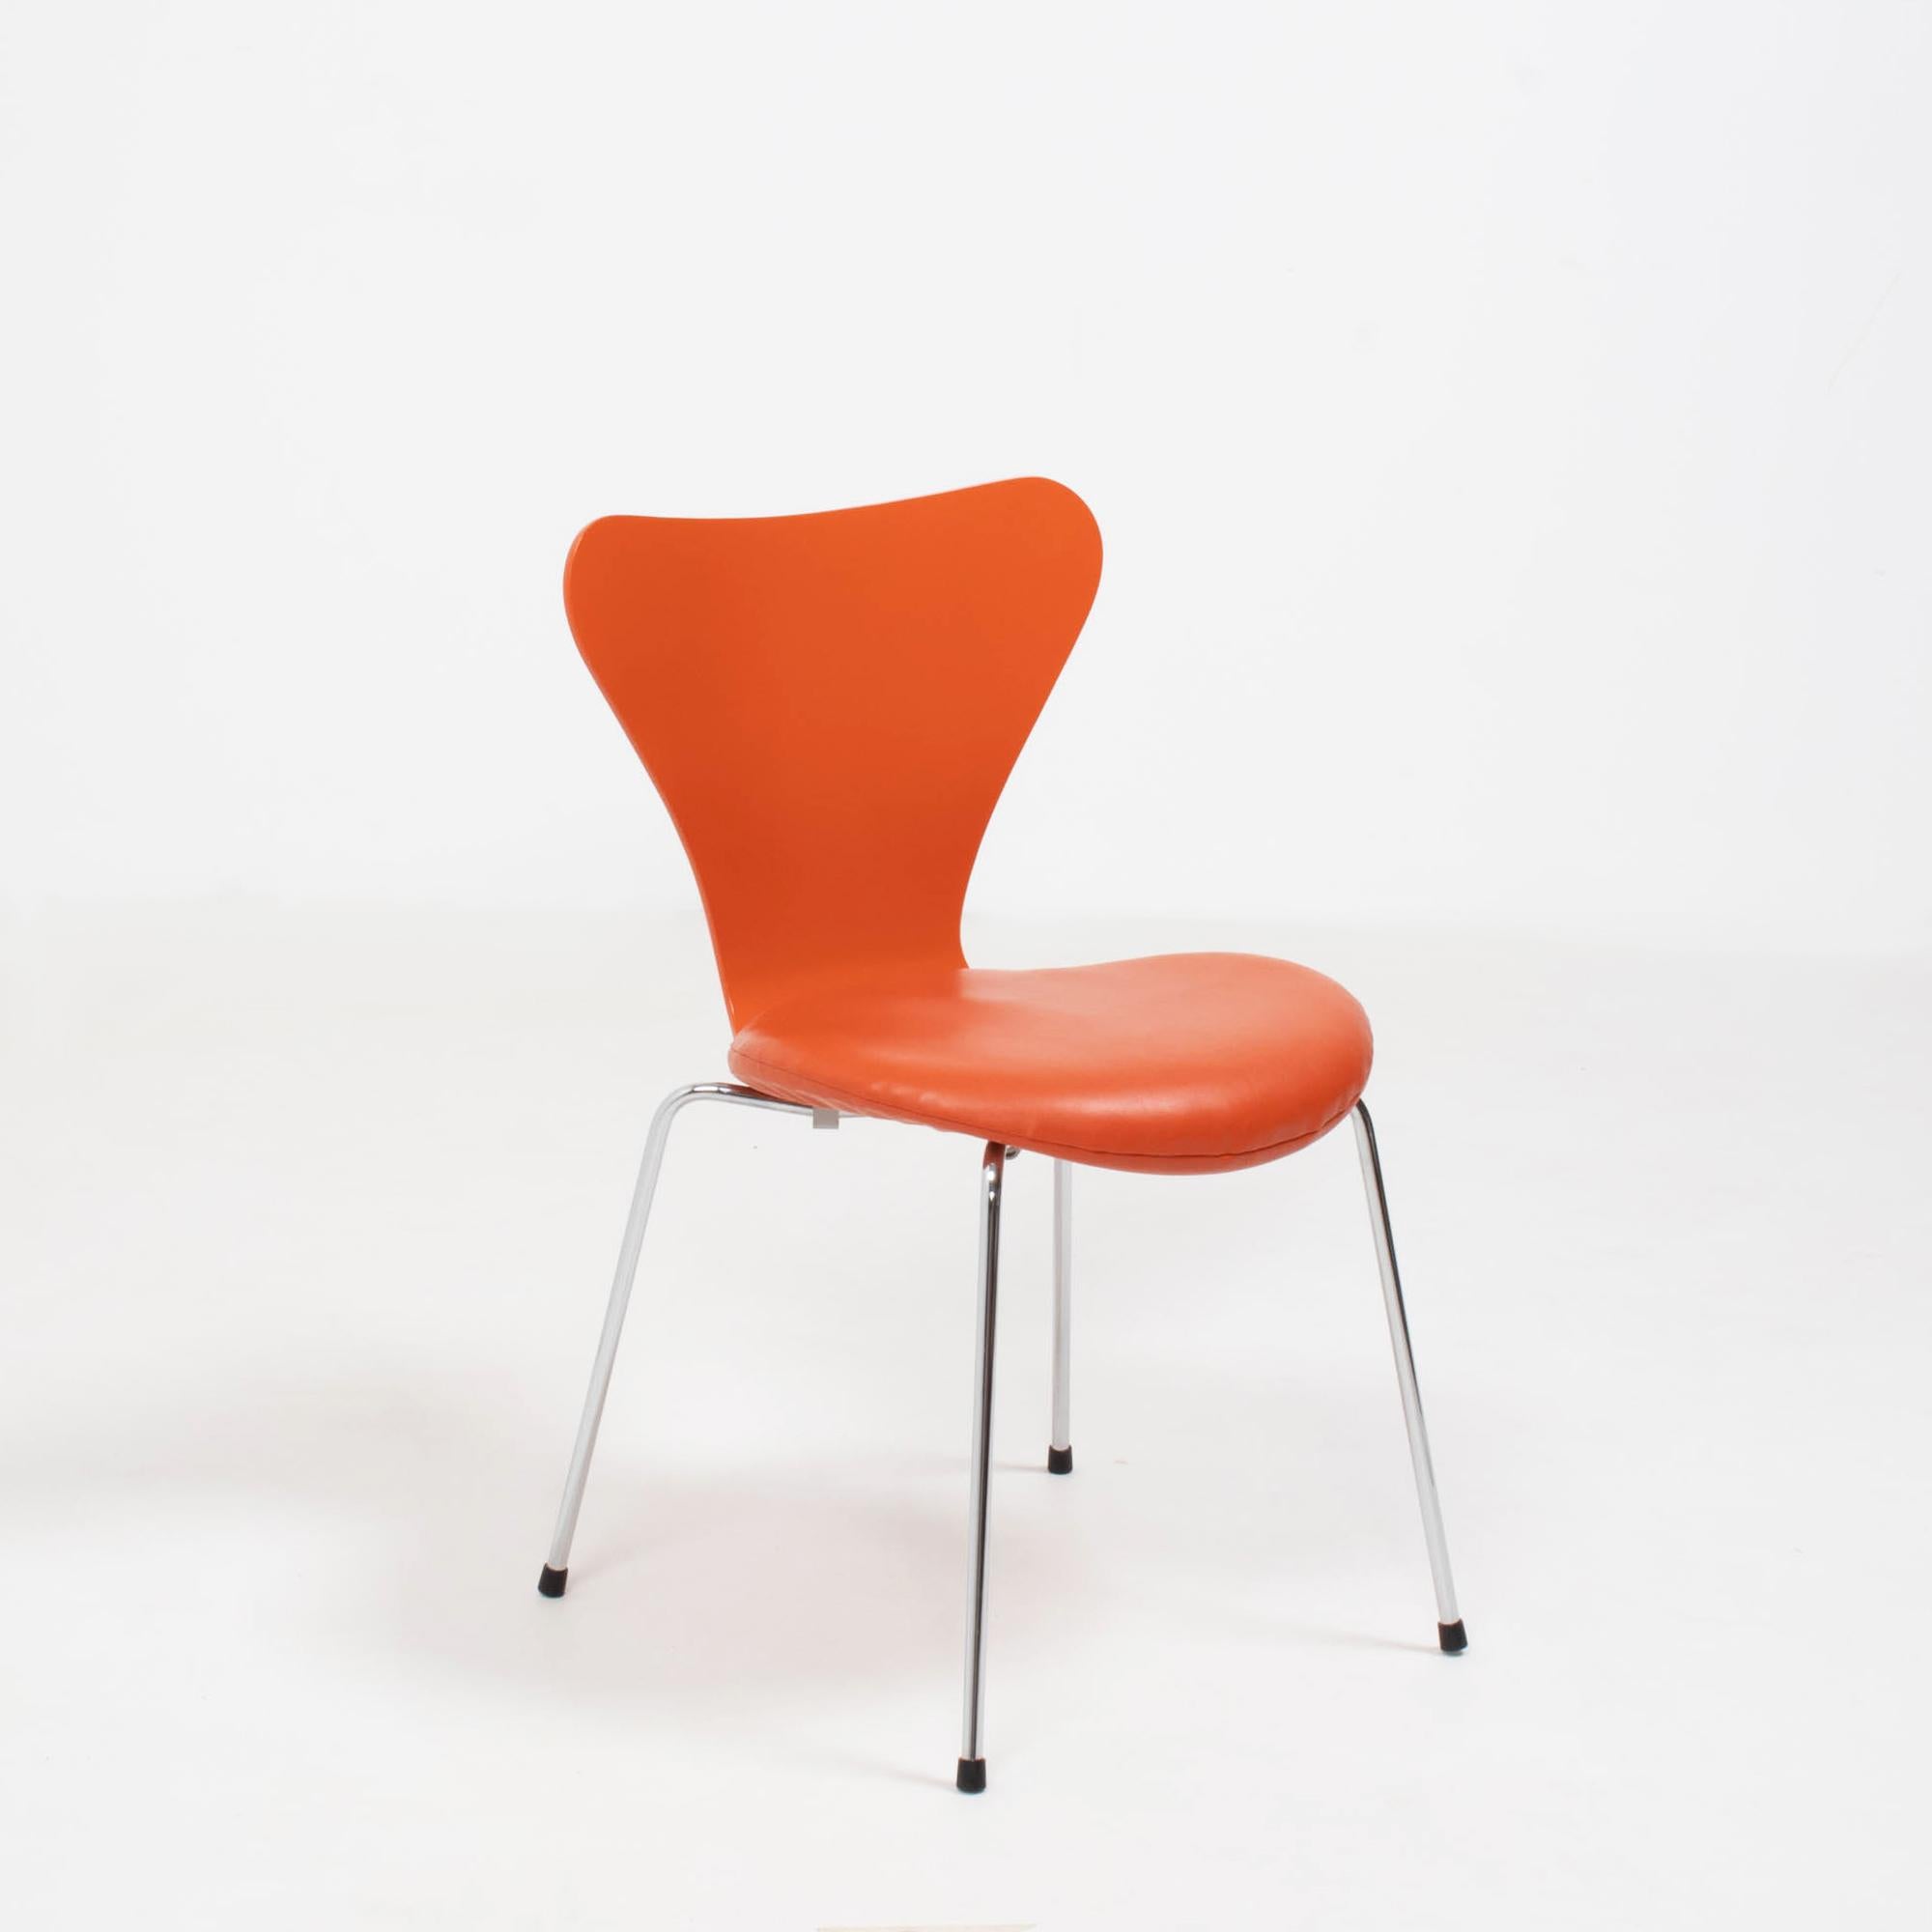 Scandinavian Modern Fritz Hansen by Arne Jacobsen Orange Leather Series 7 Dining Chairs, Set of 4 For Sale